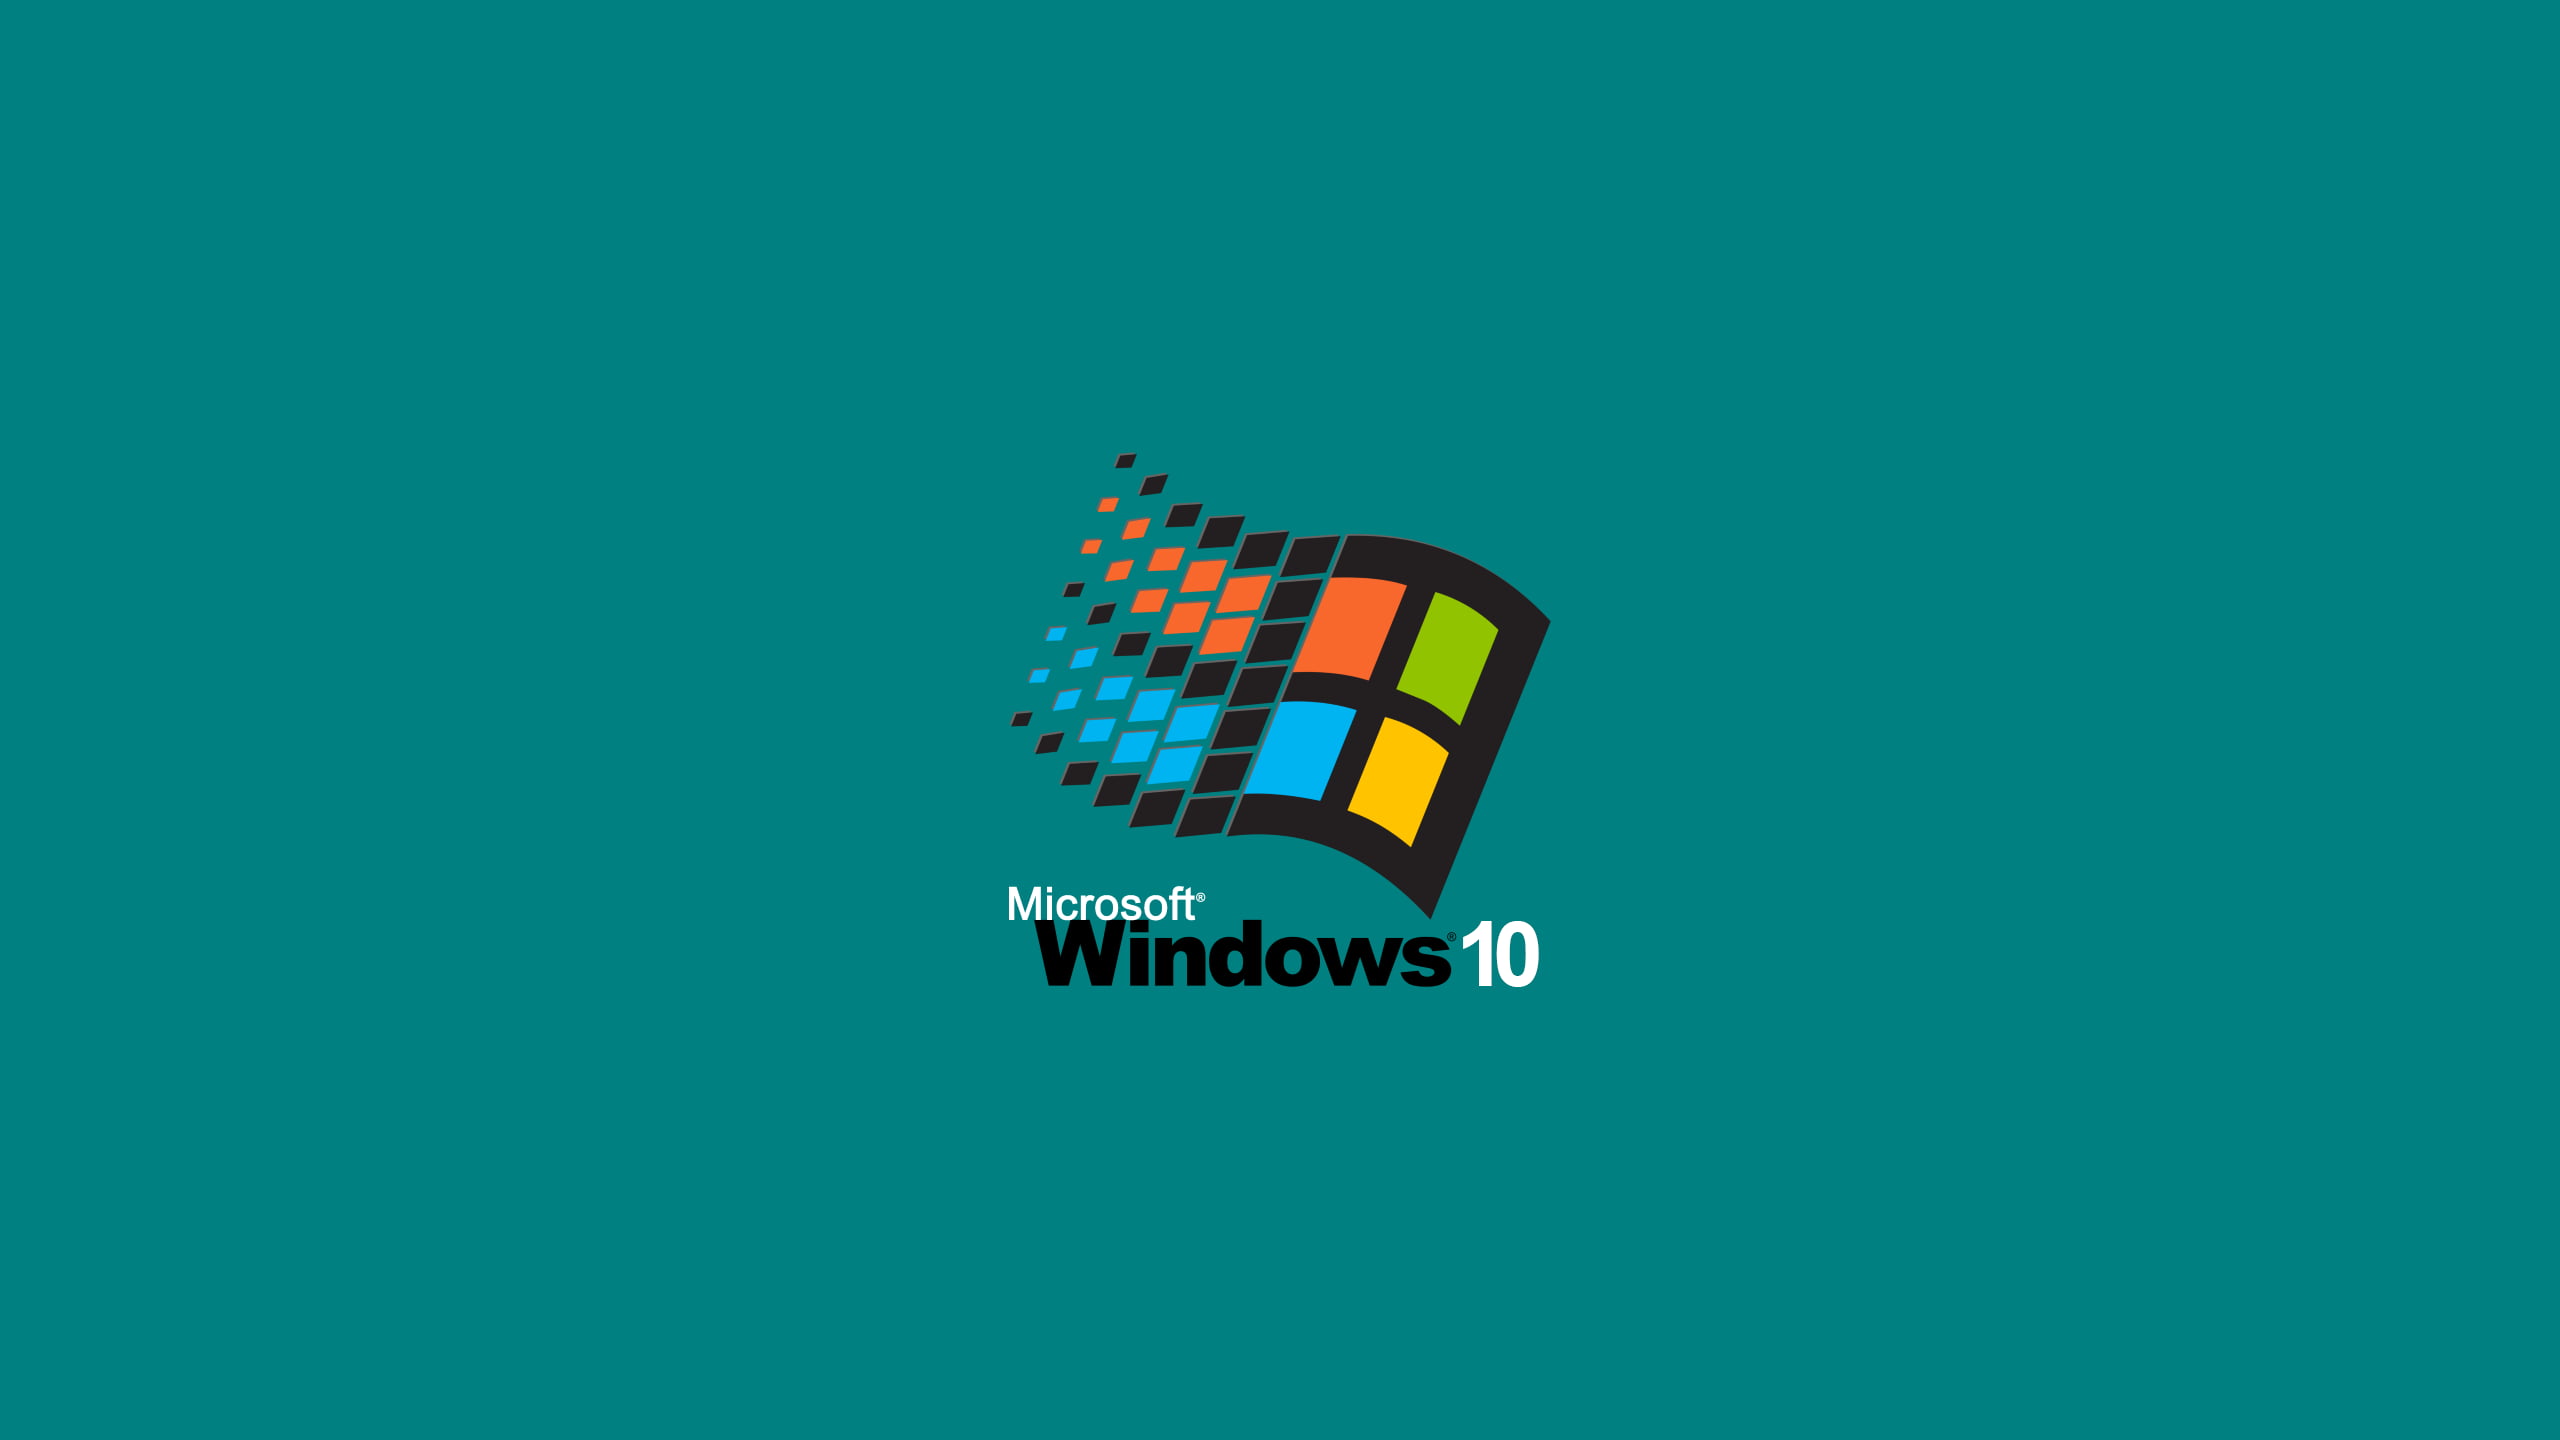 Microsoft Windows 10, humor, copy space, communication, text